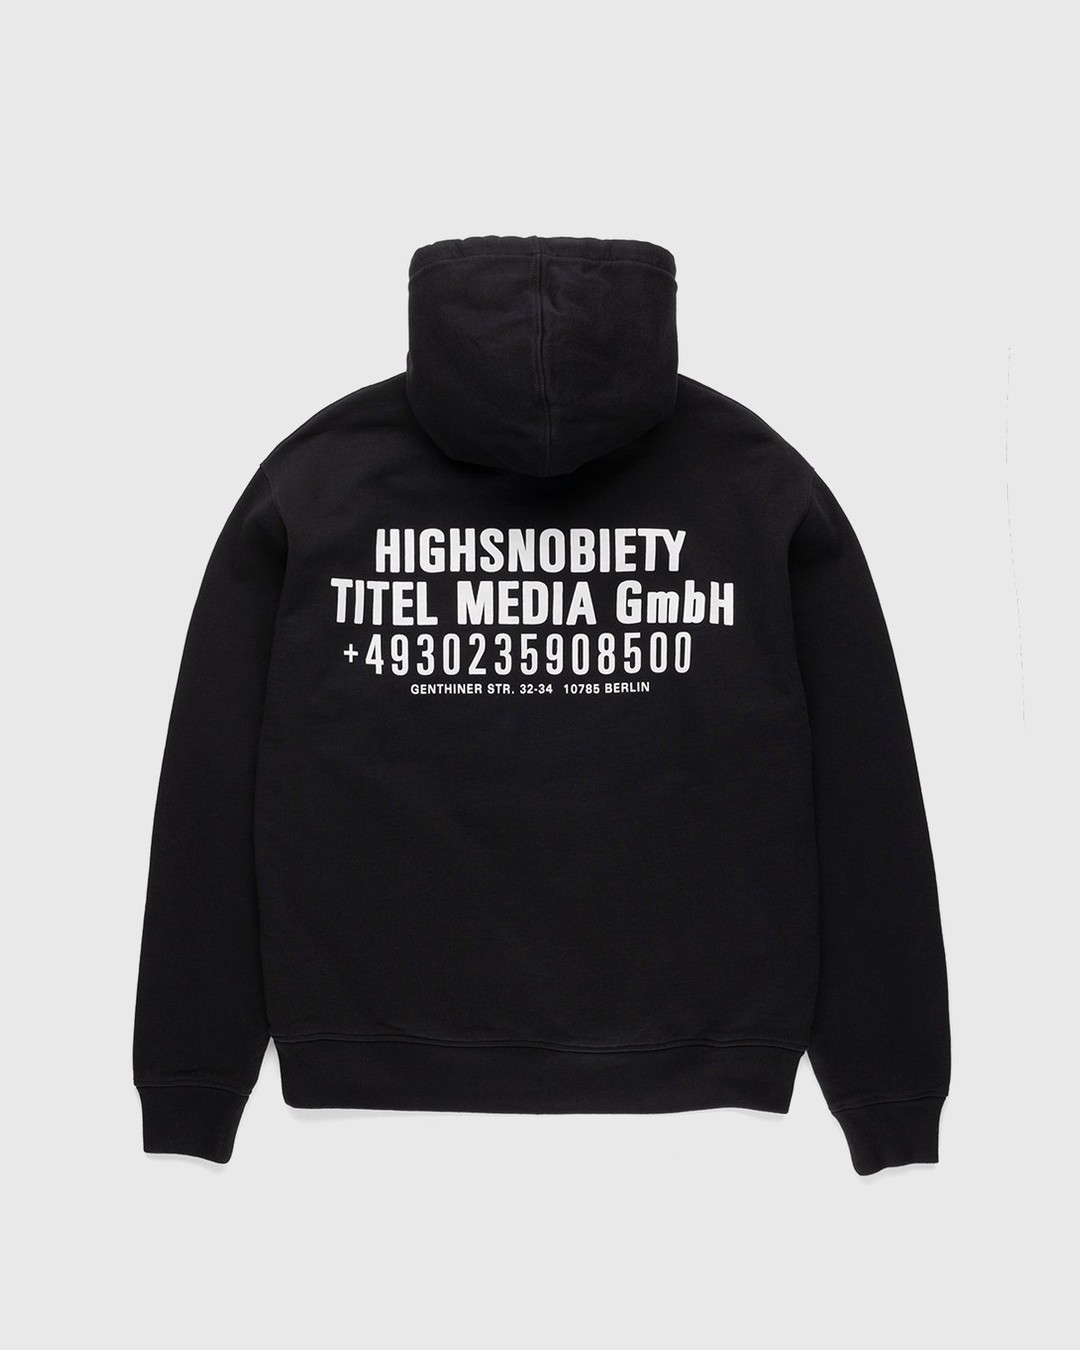 Highsnobiety – Titel Media GmbH Hoodie Black - Hoodies - Black - Image 1